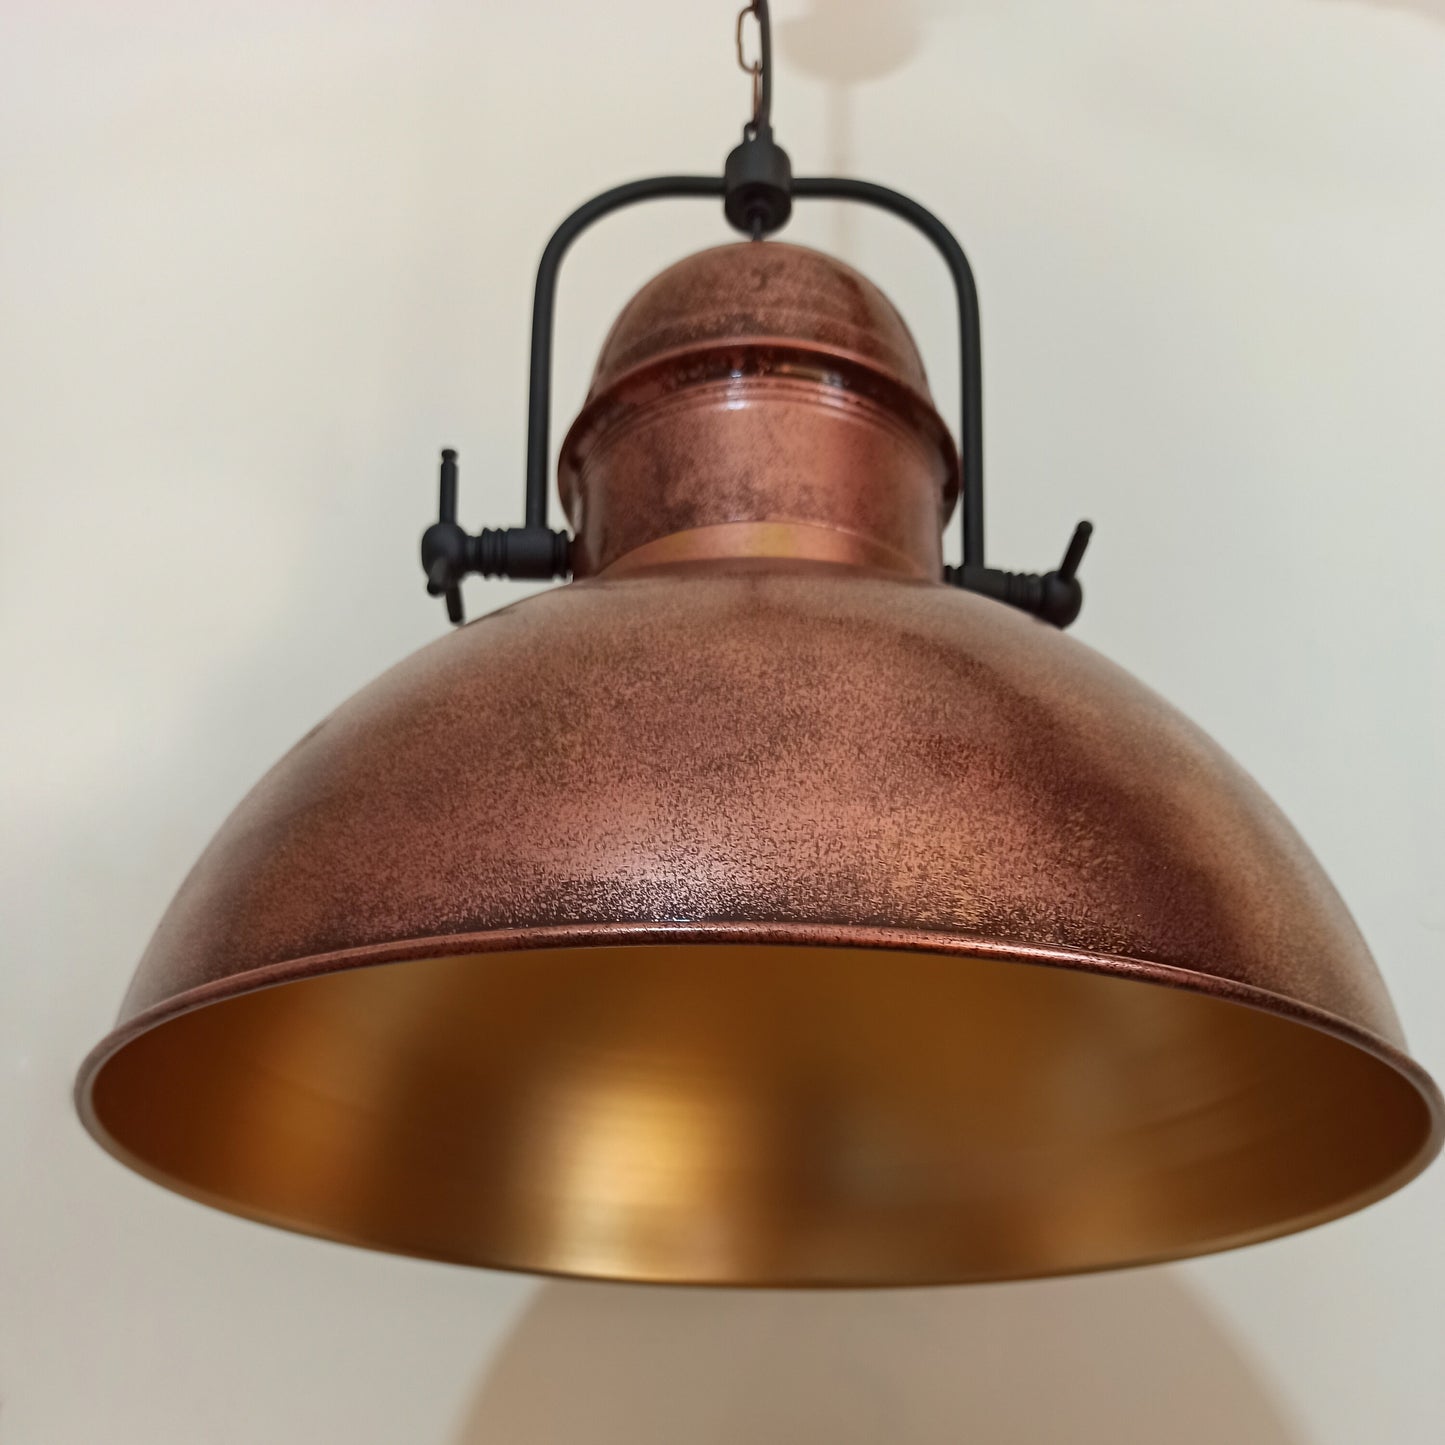 COPPER CAGE LIGHTING, Industrial Lighting, Pendant Light, Vintage Lighting, Hanging Home Pendant Light, Copper Vintage, Copper Pendant Light